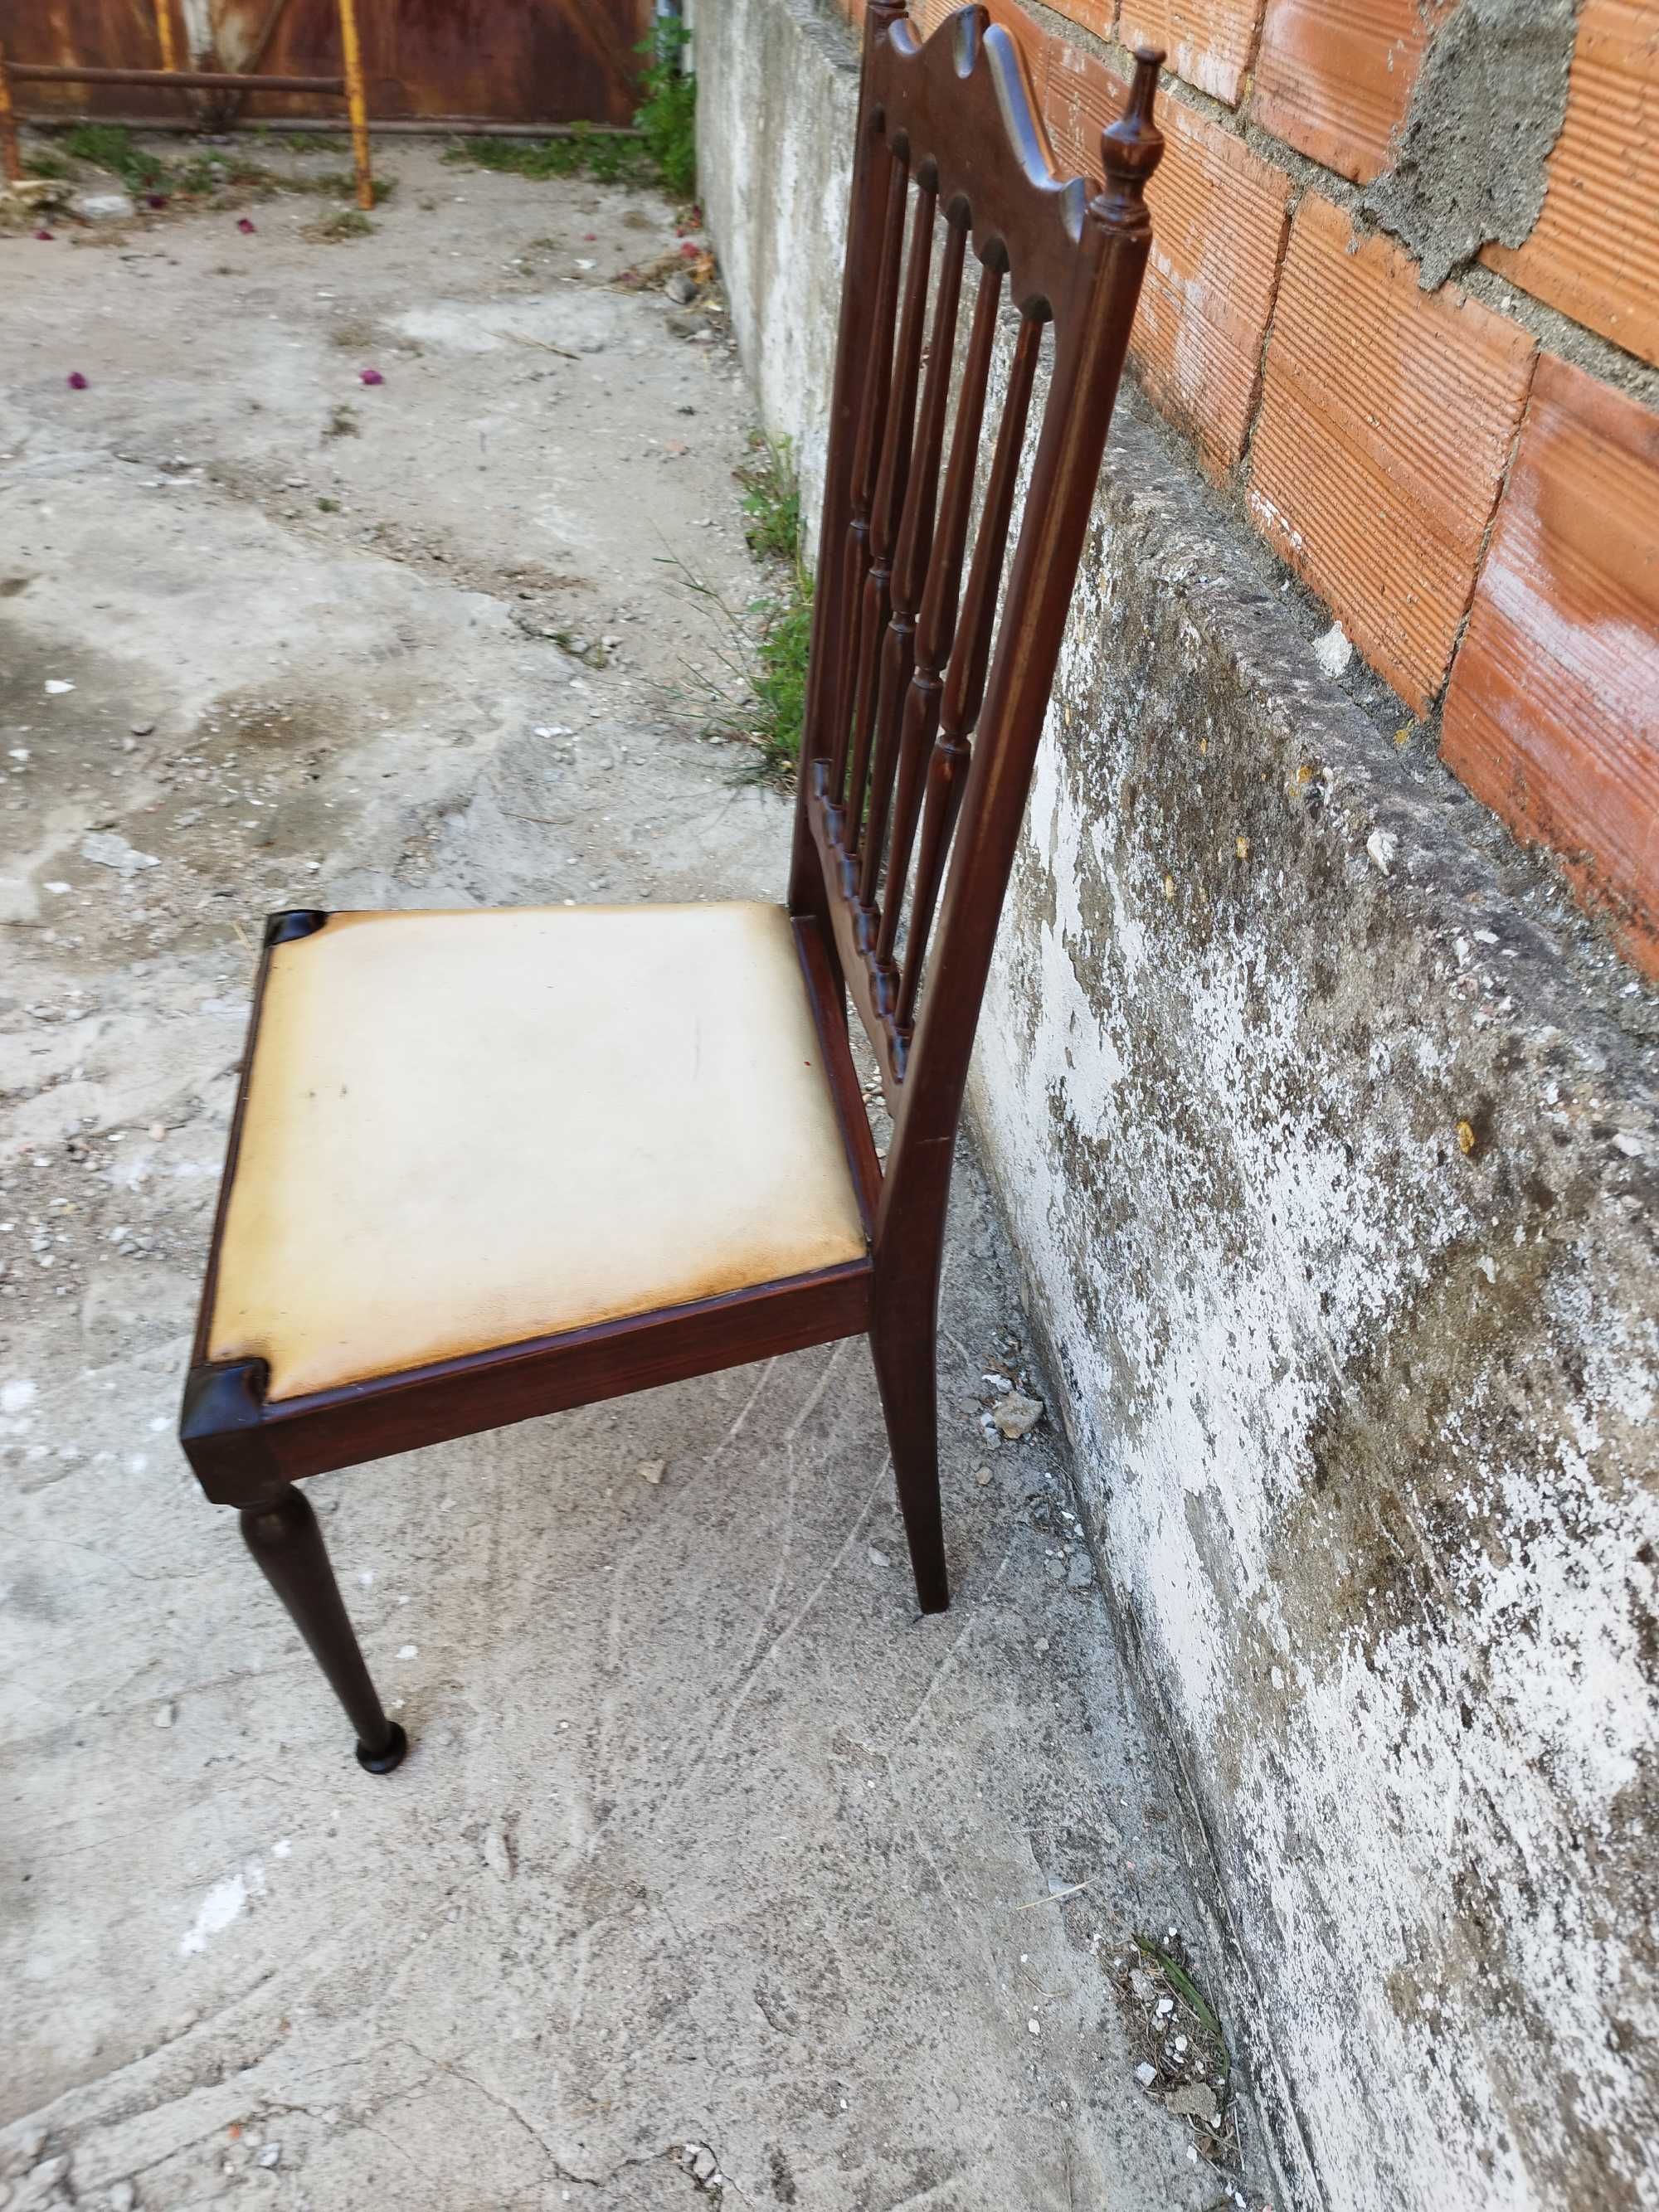 Cadeira antiga (vintage)